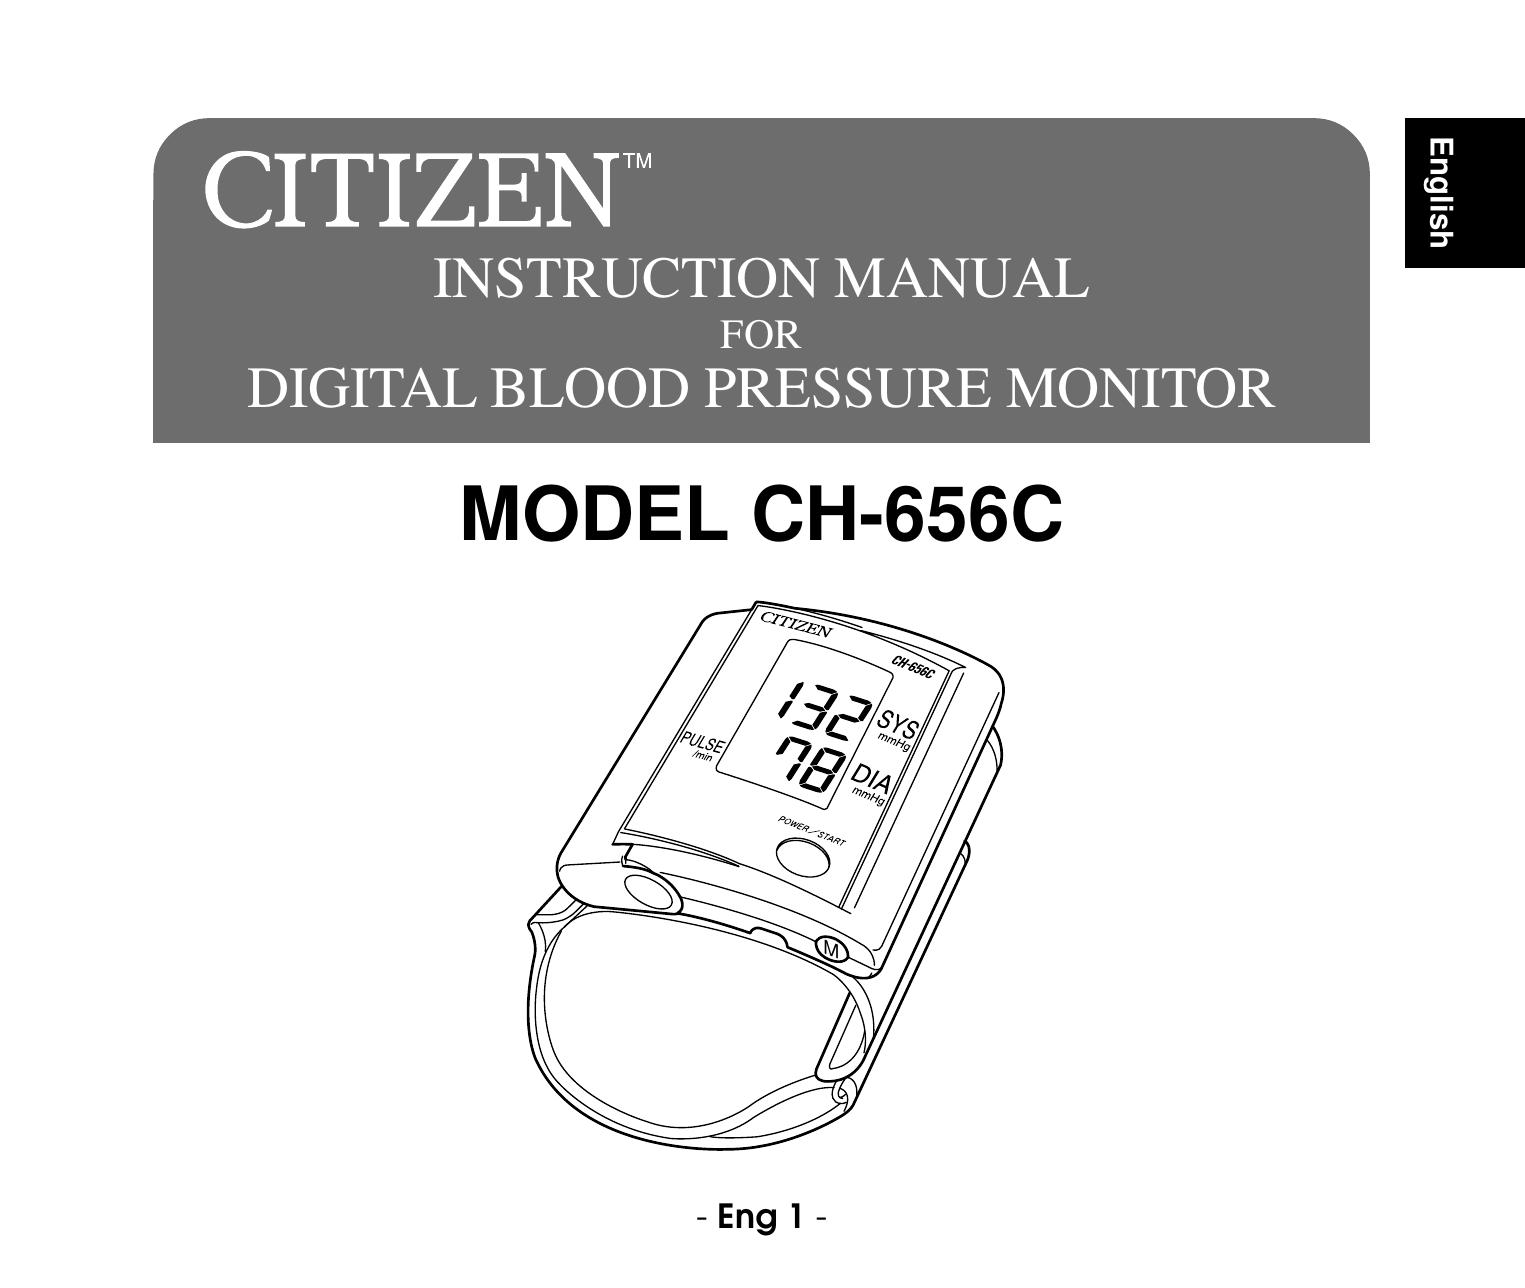 Citizen CH-656C Blood Pressure Monitor User Manual